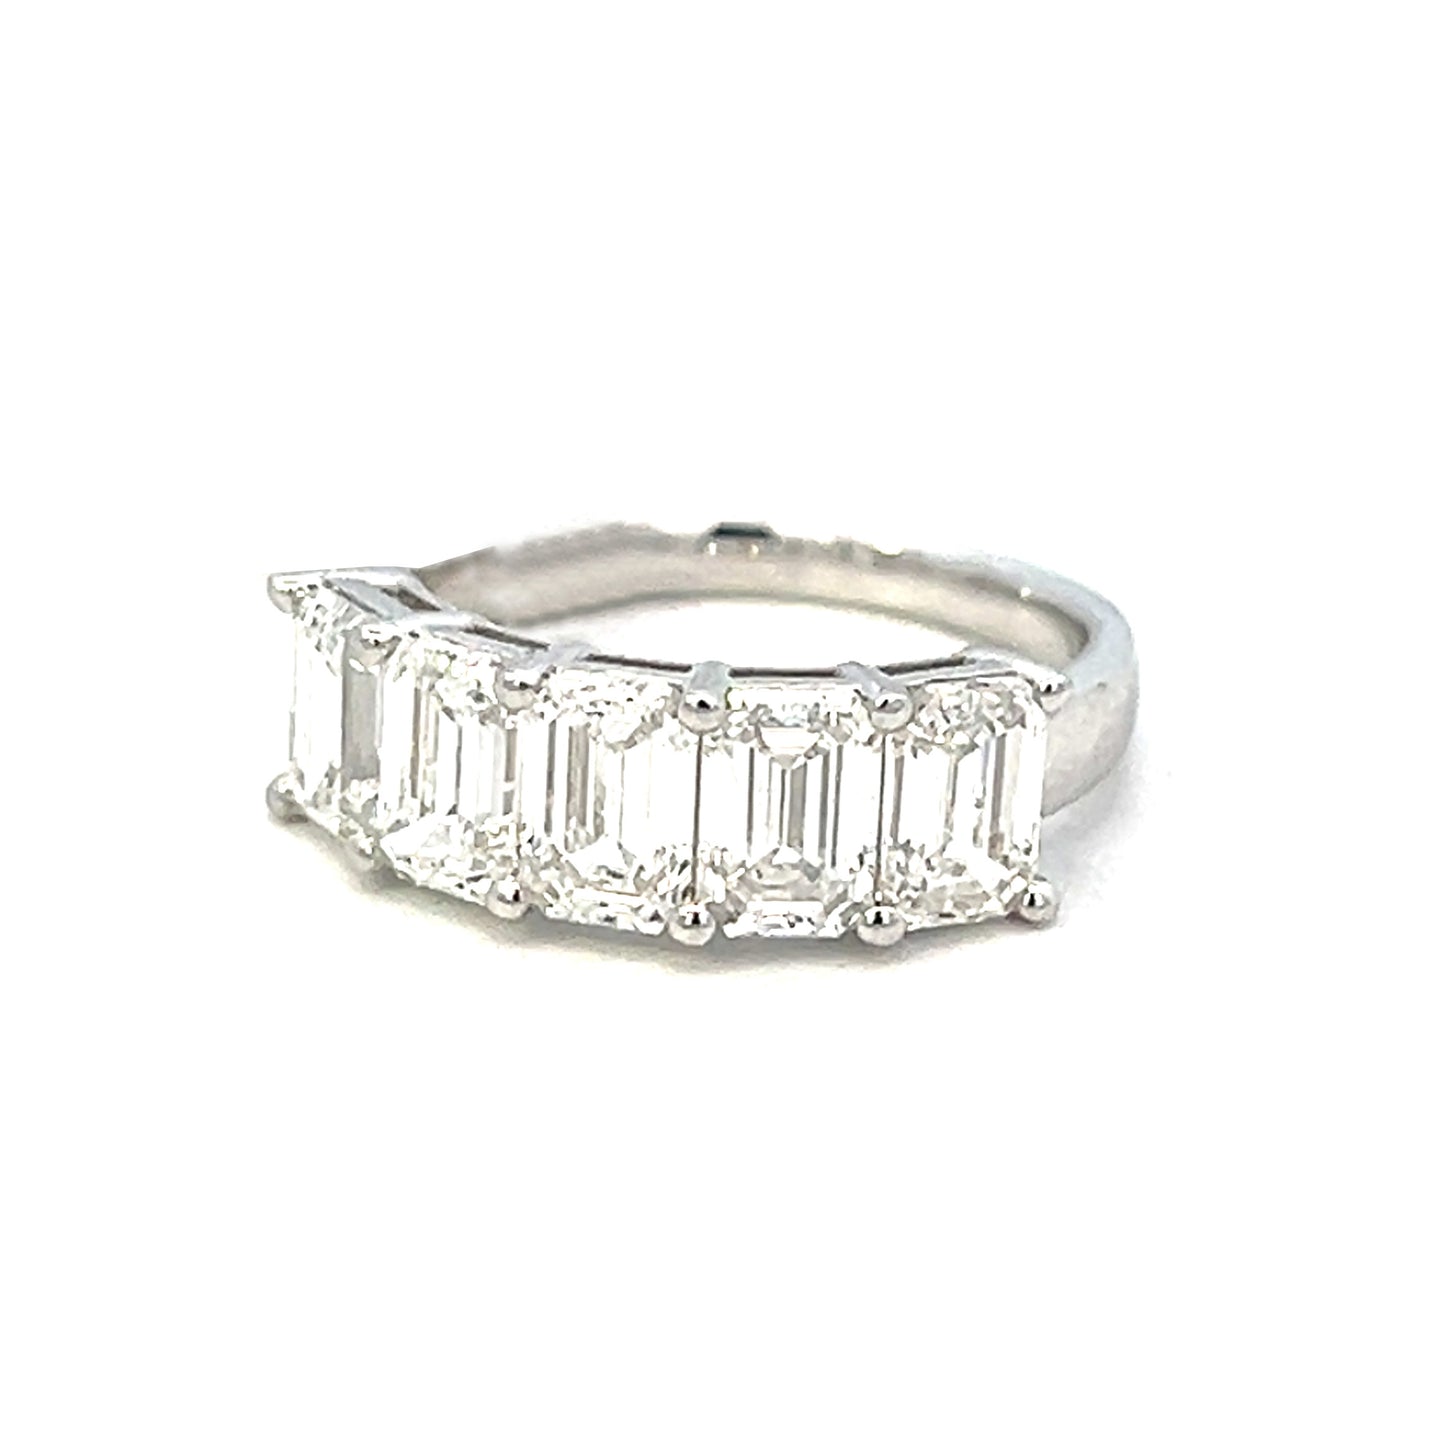 3.76cttw Emerald Cut Diamond Ring Gold Band | Emerald Cut Diamond Ring | Emerald Cut Engagement Ring Diamond | More than A 3 Carat Emerald Cut Diamond Ring